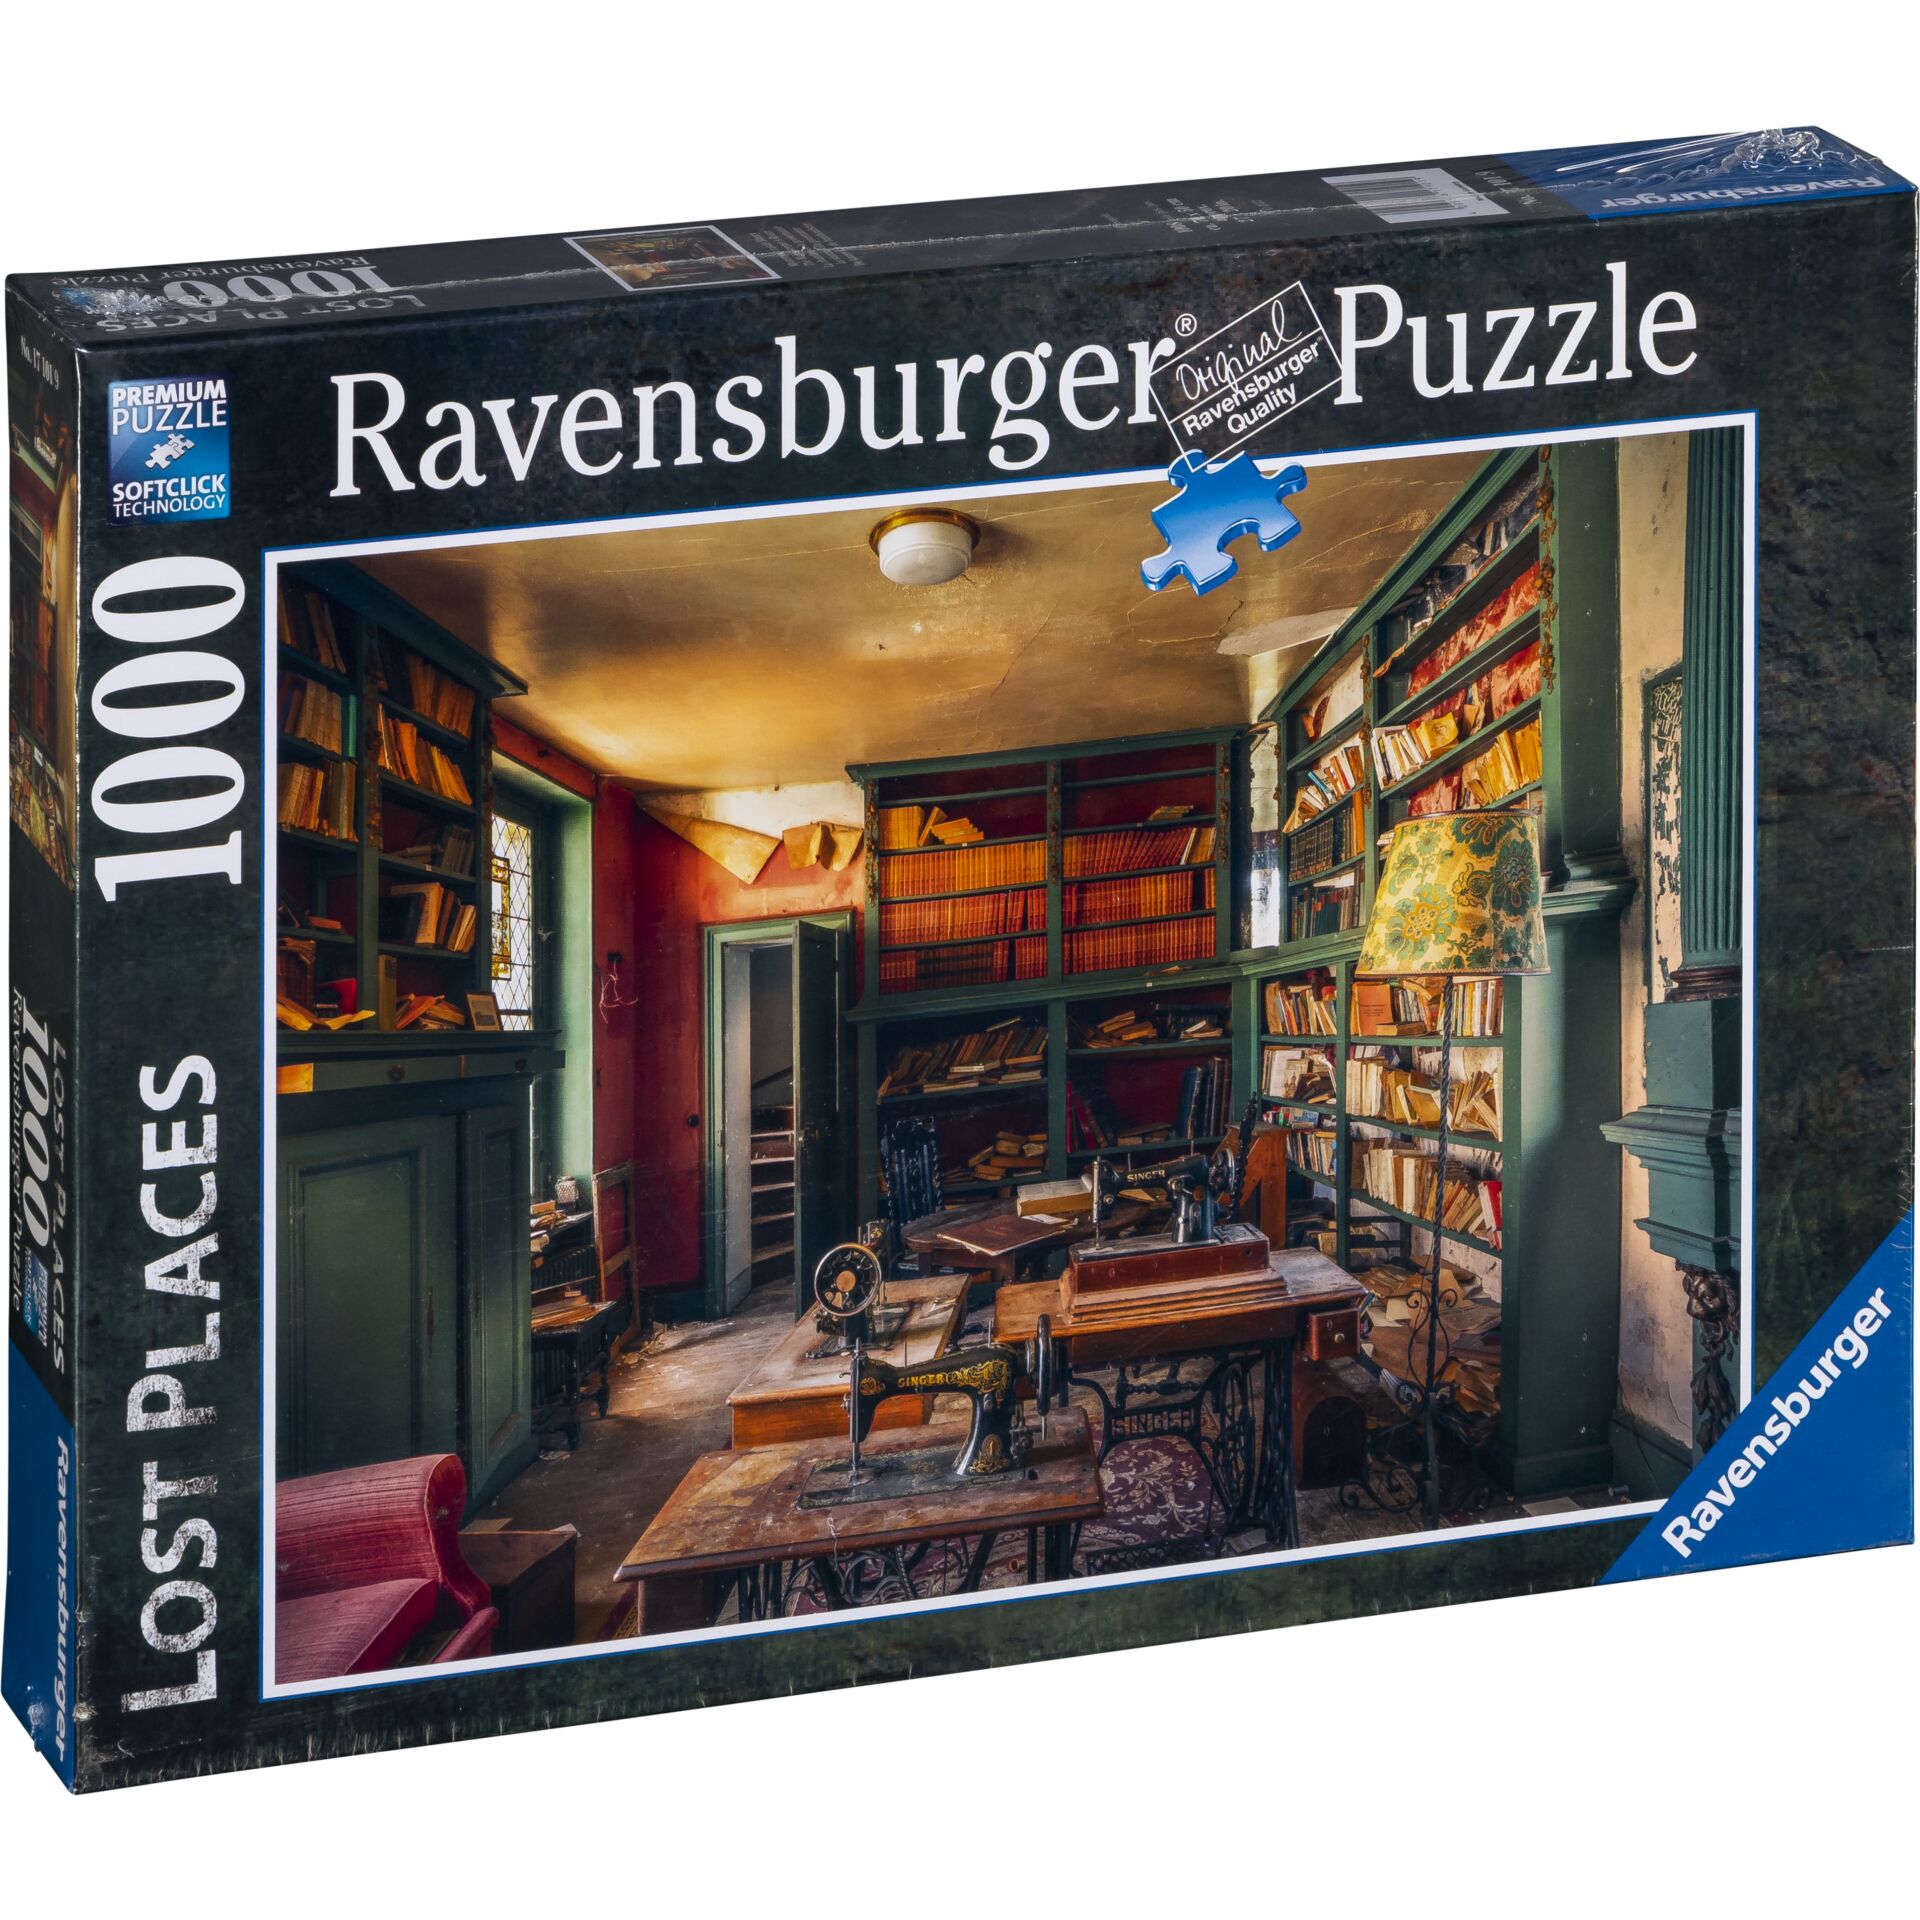 Ravensburger Puzzle Lost Places Mysterious castle library 